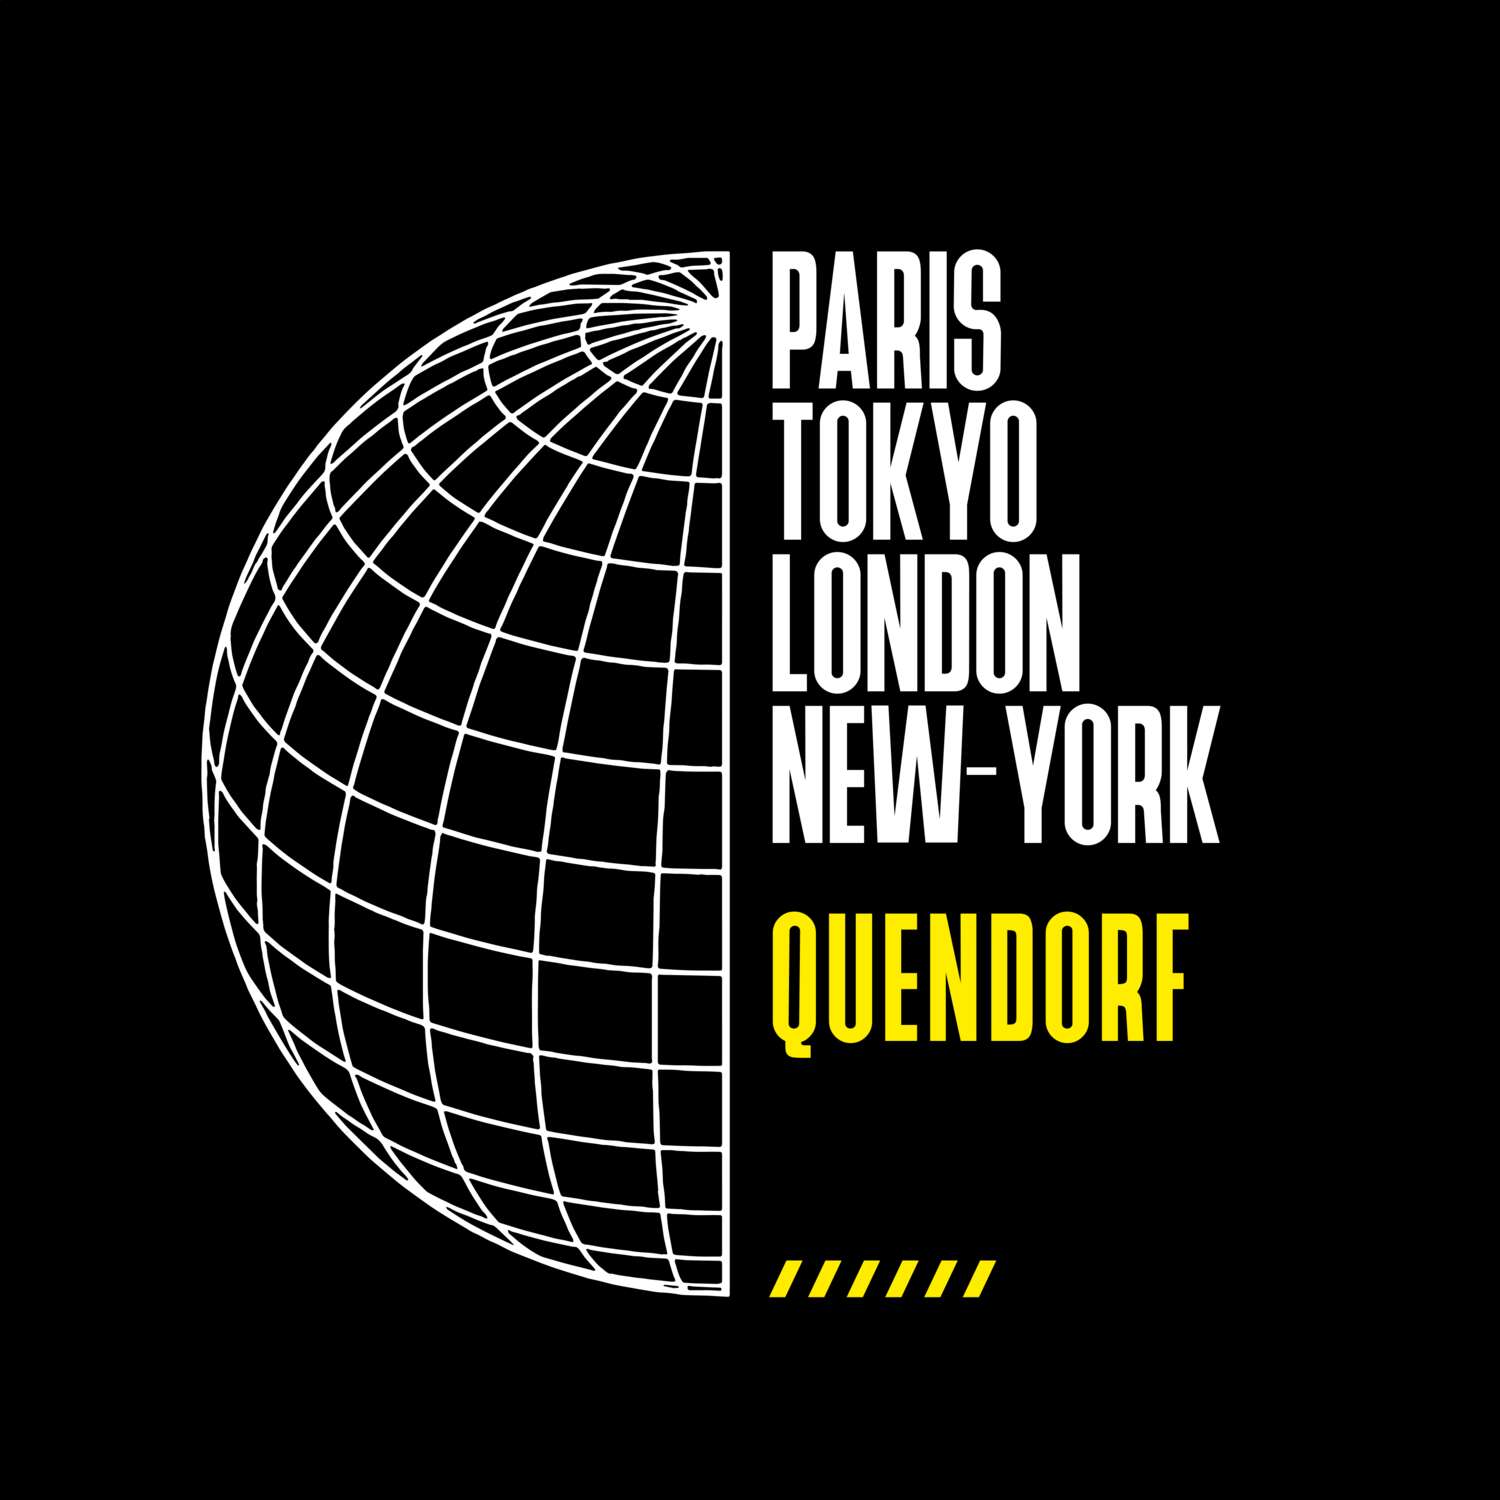 Quendorf T-Shirt »Paris Tokyo London«